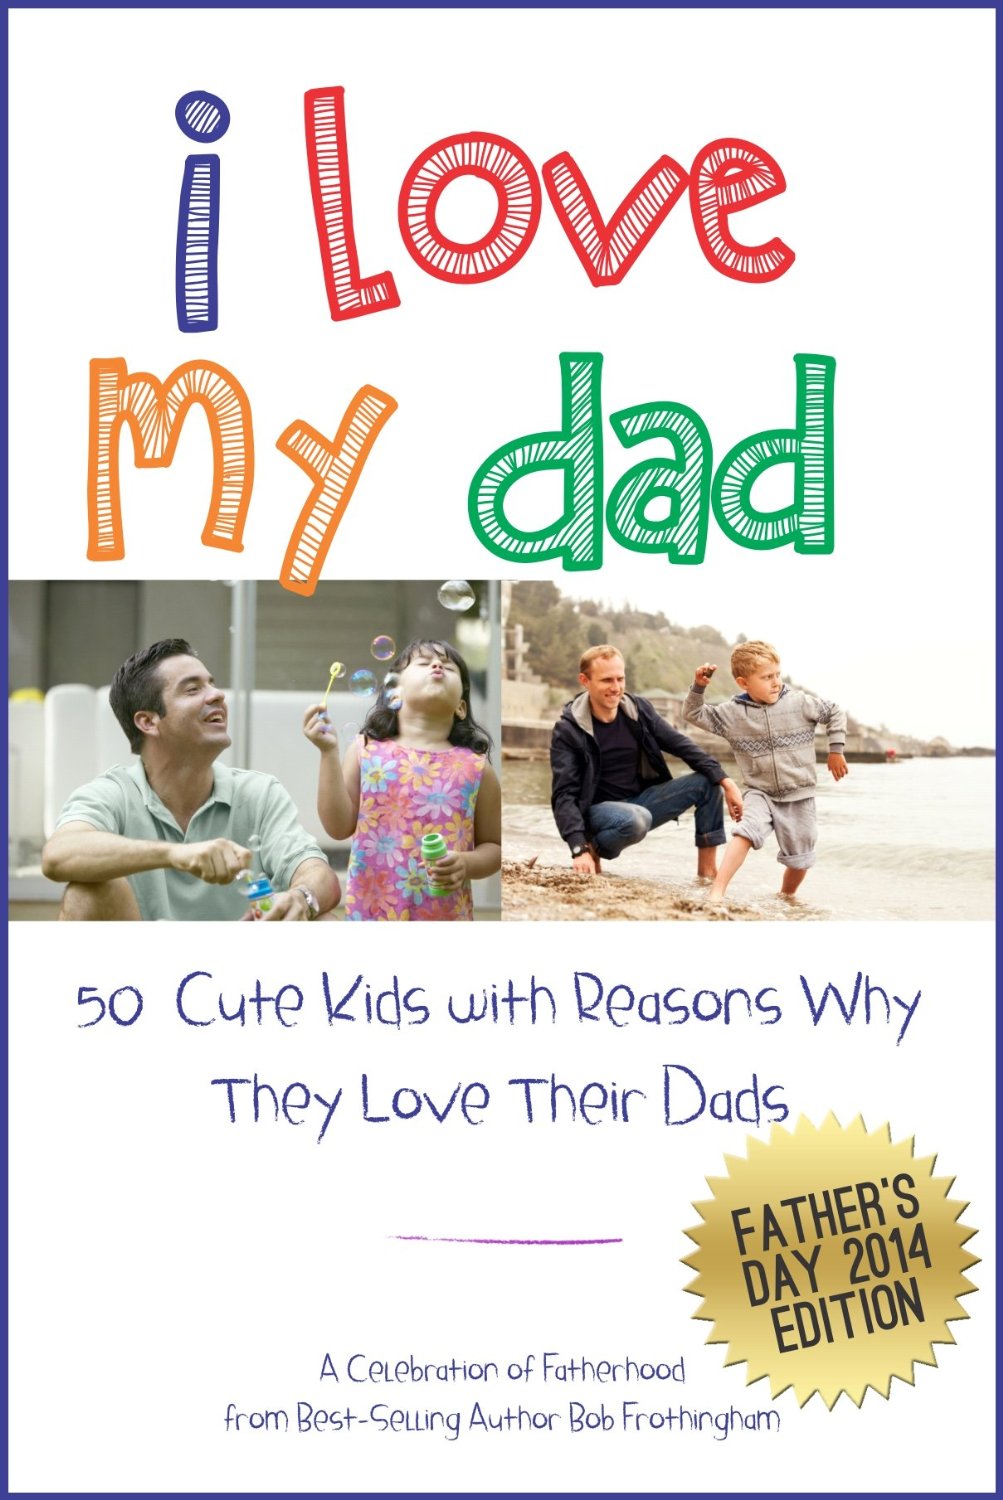 I Love My Dad – A Celebration of Fatherhood by Bob Frothingham